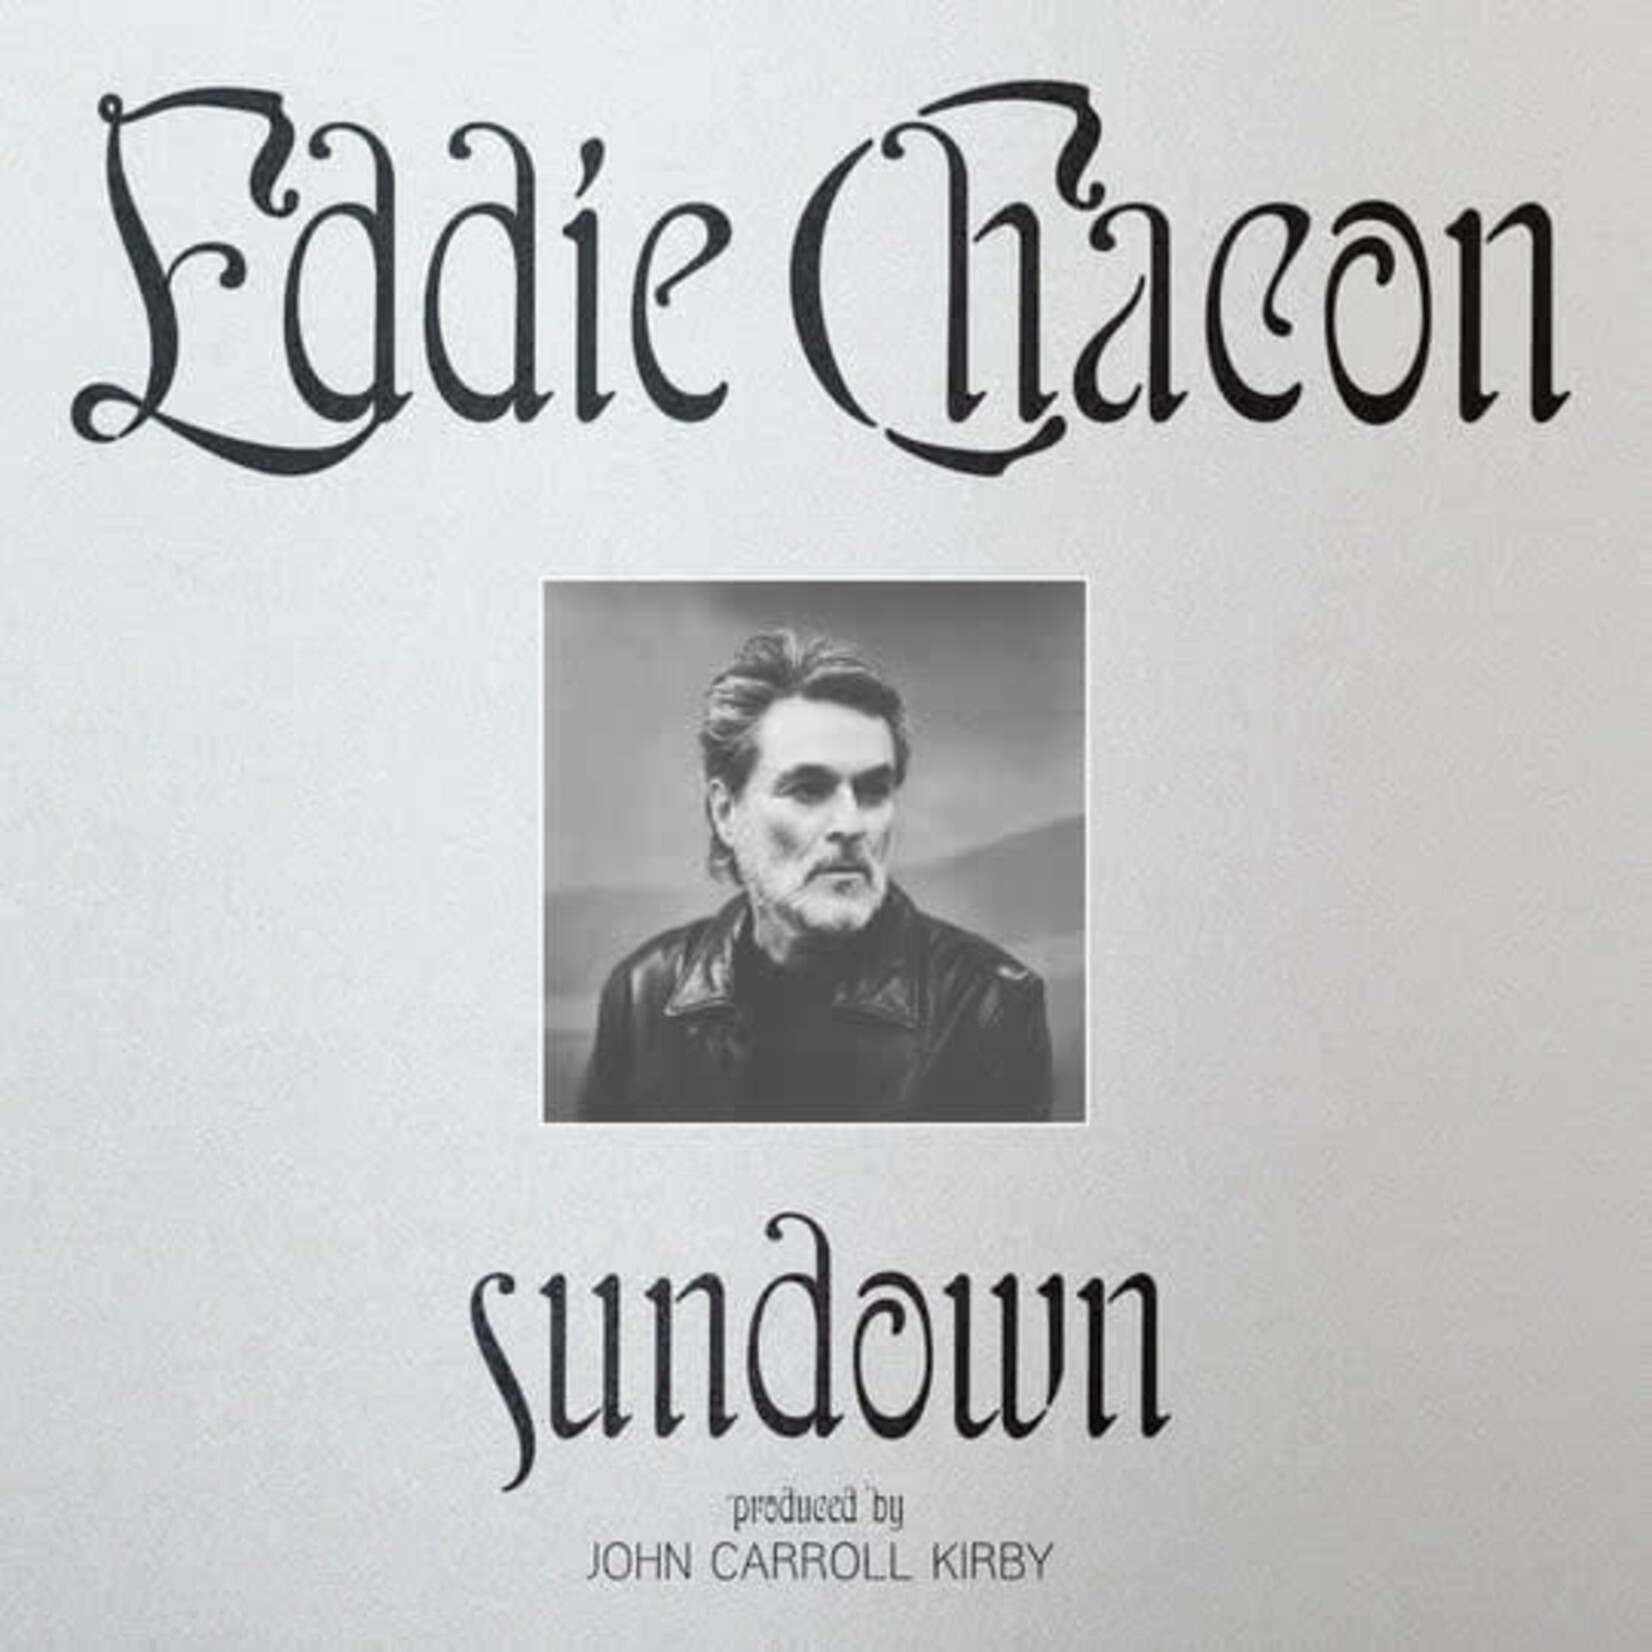 [New] Chacon, Eddie: Sundown [STONES THROW RECORDS]